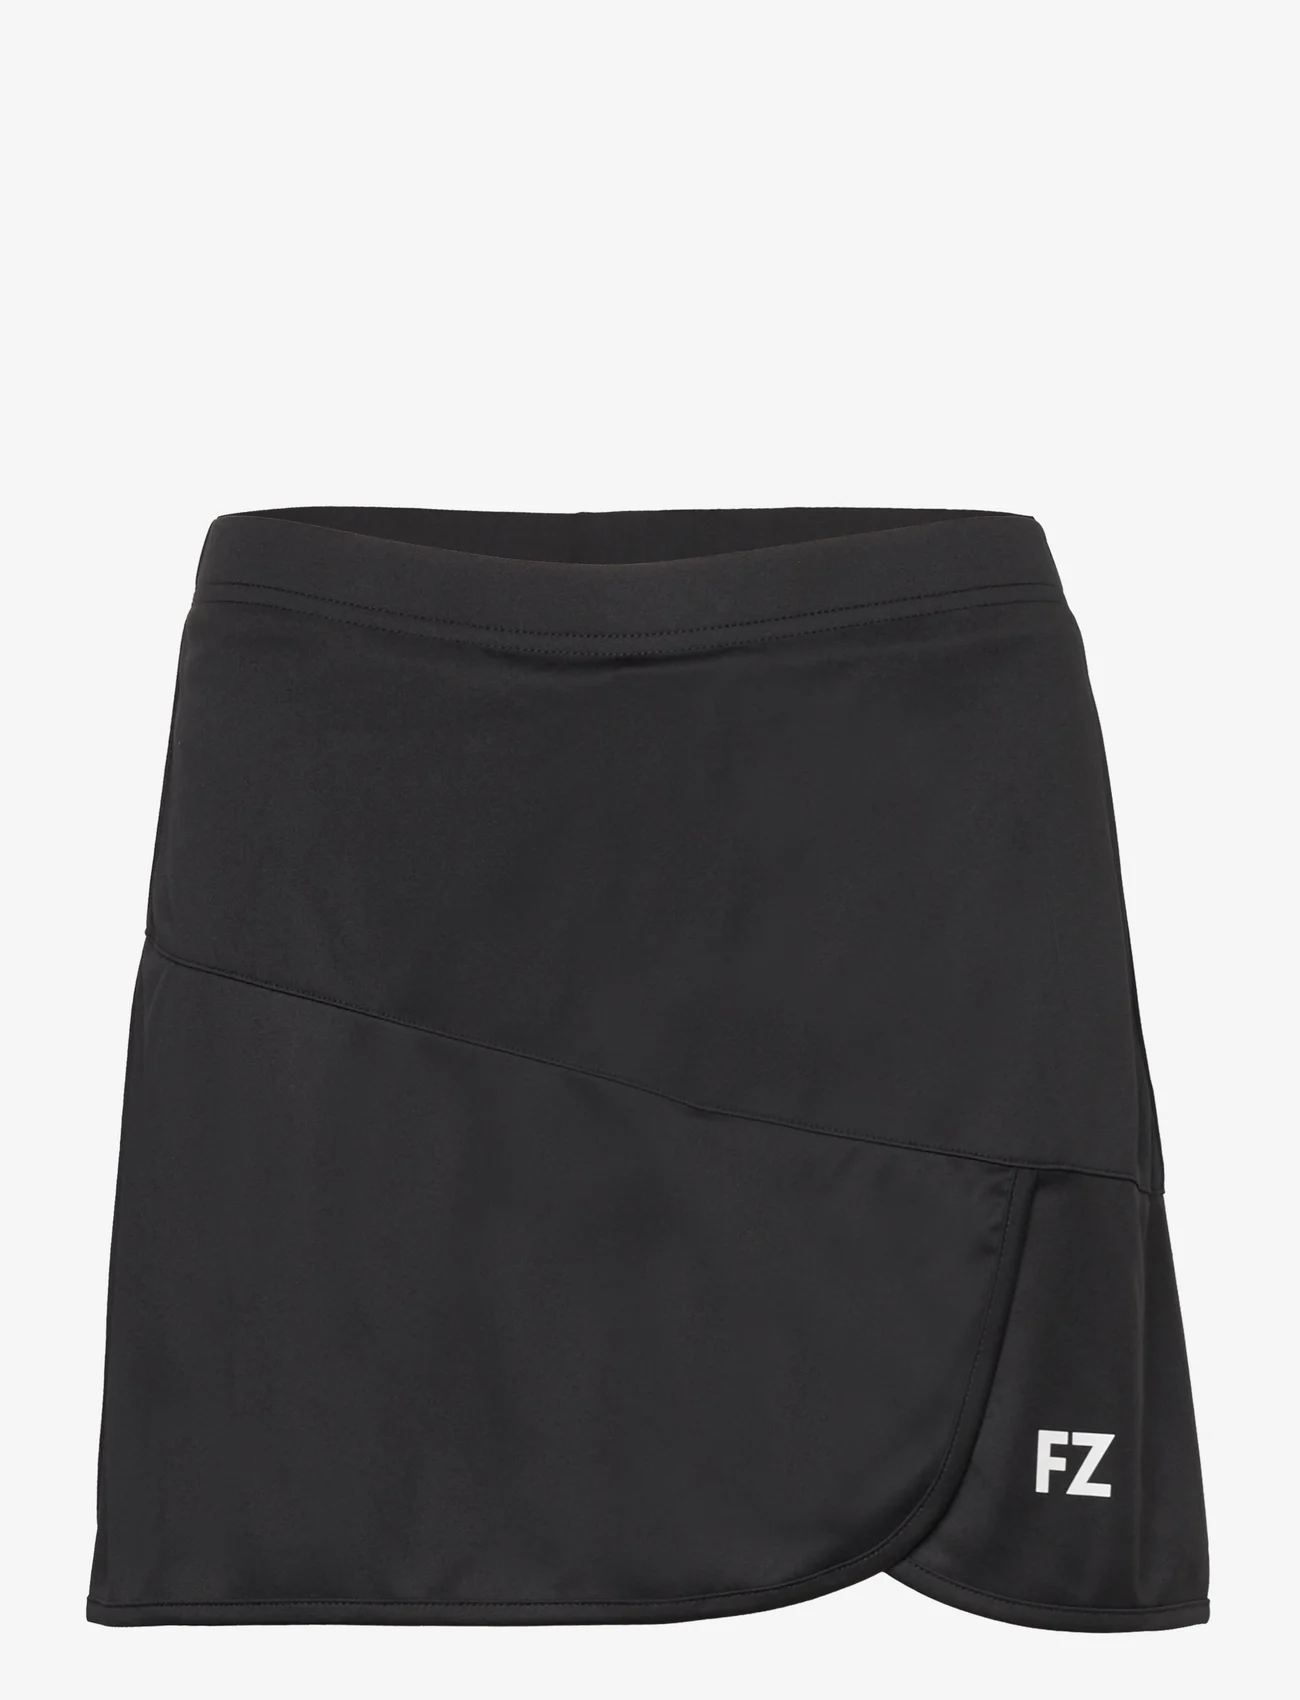 FZ Forza - Liddi W Skirt - Ball pocket - skirts - 96 black - 0